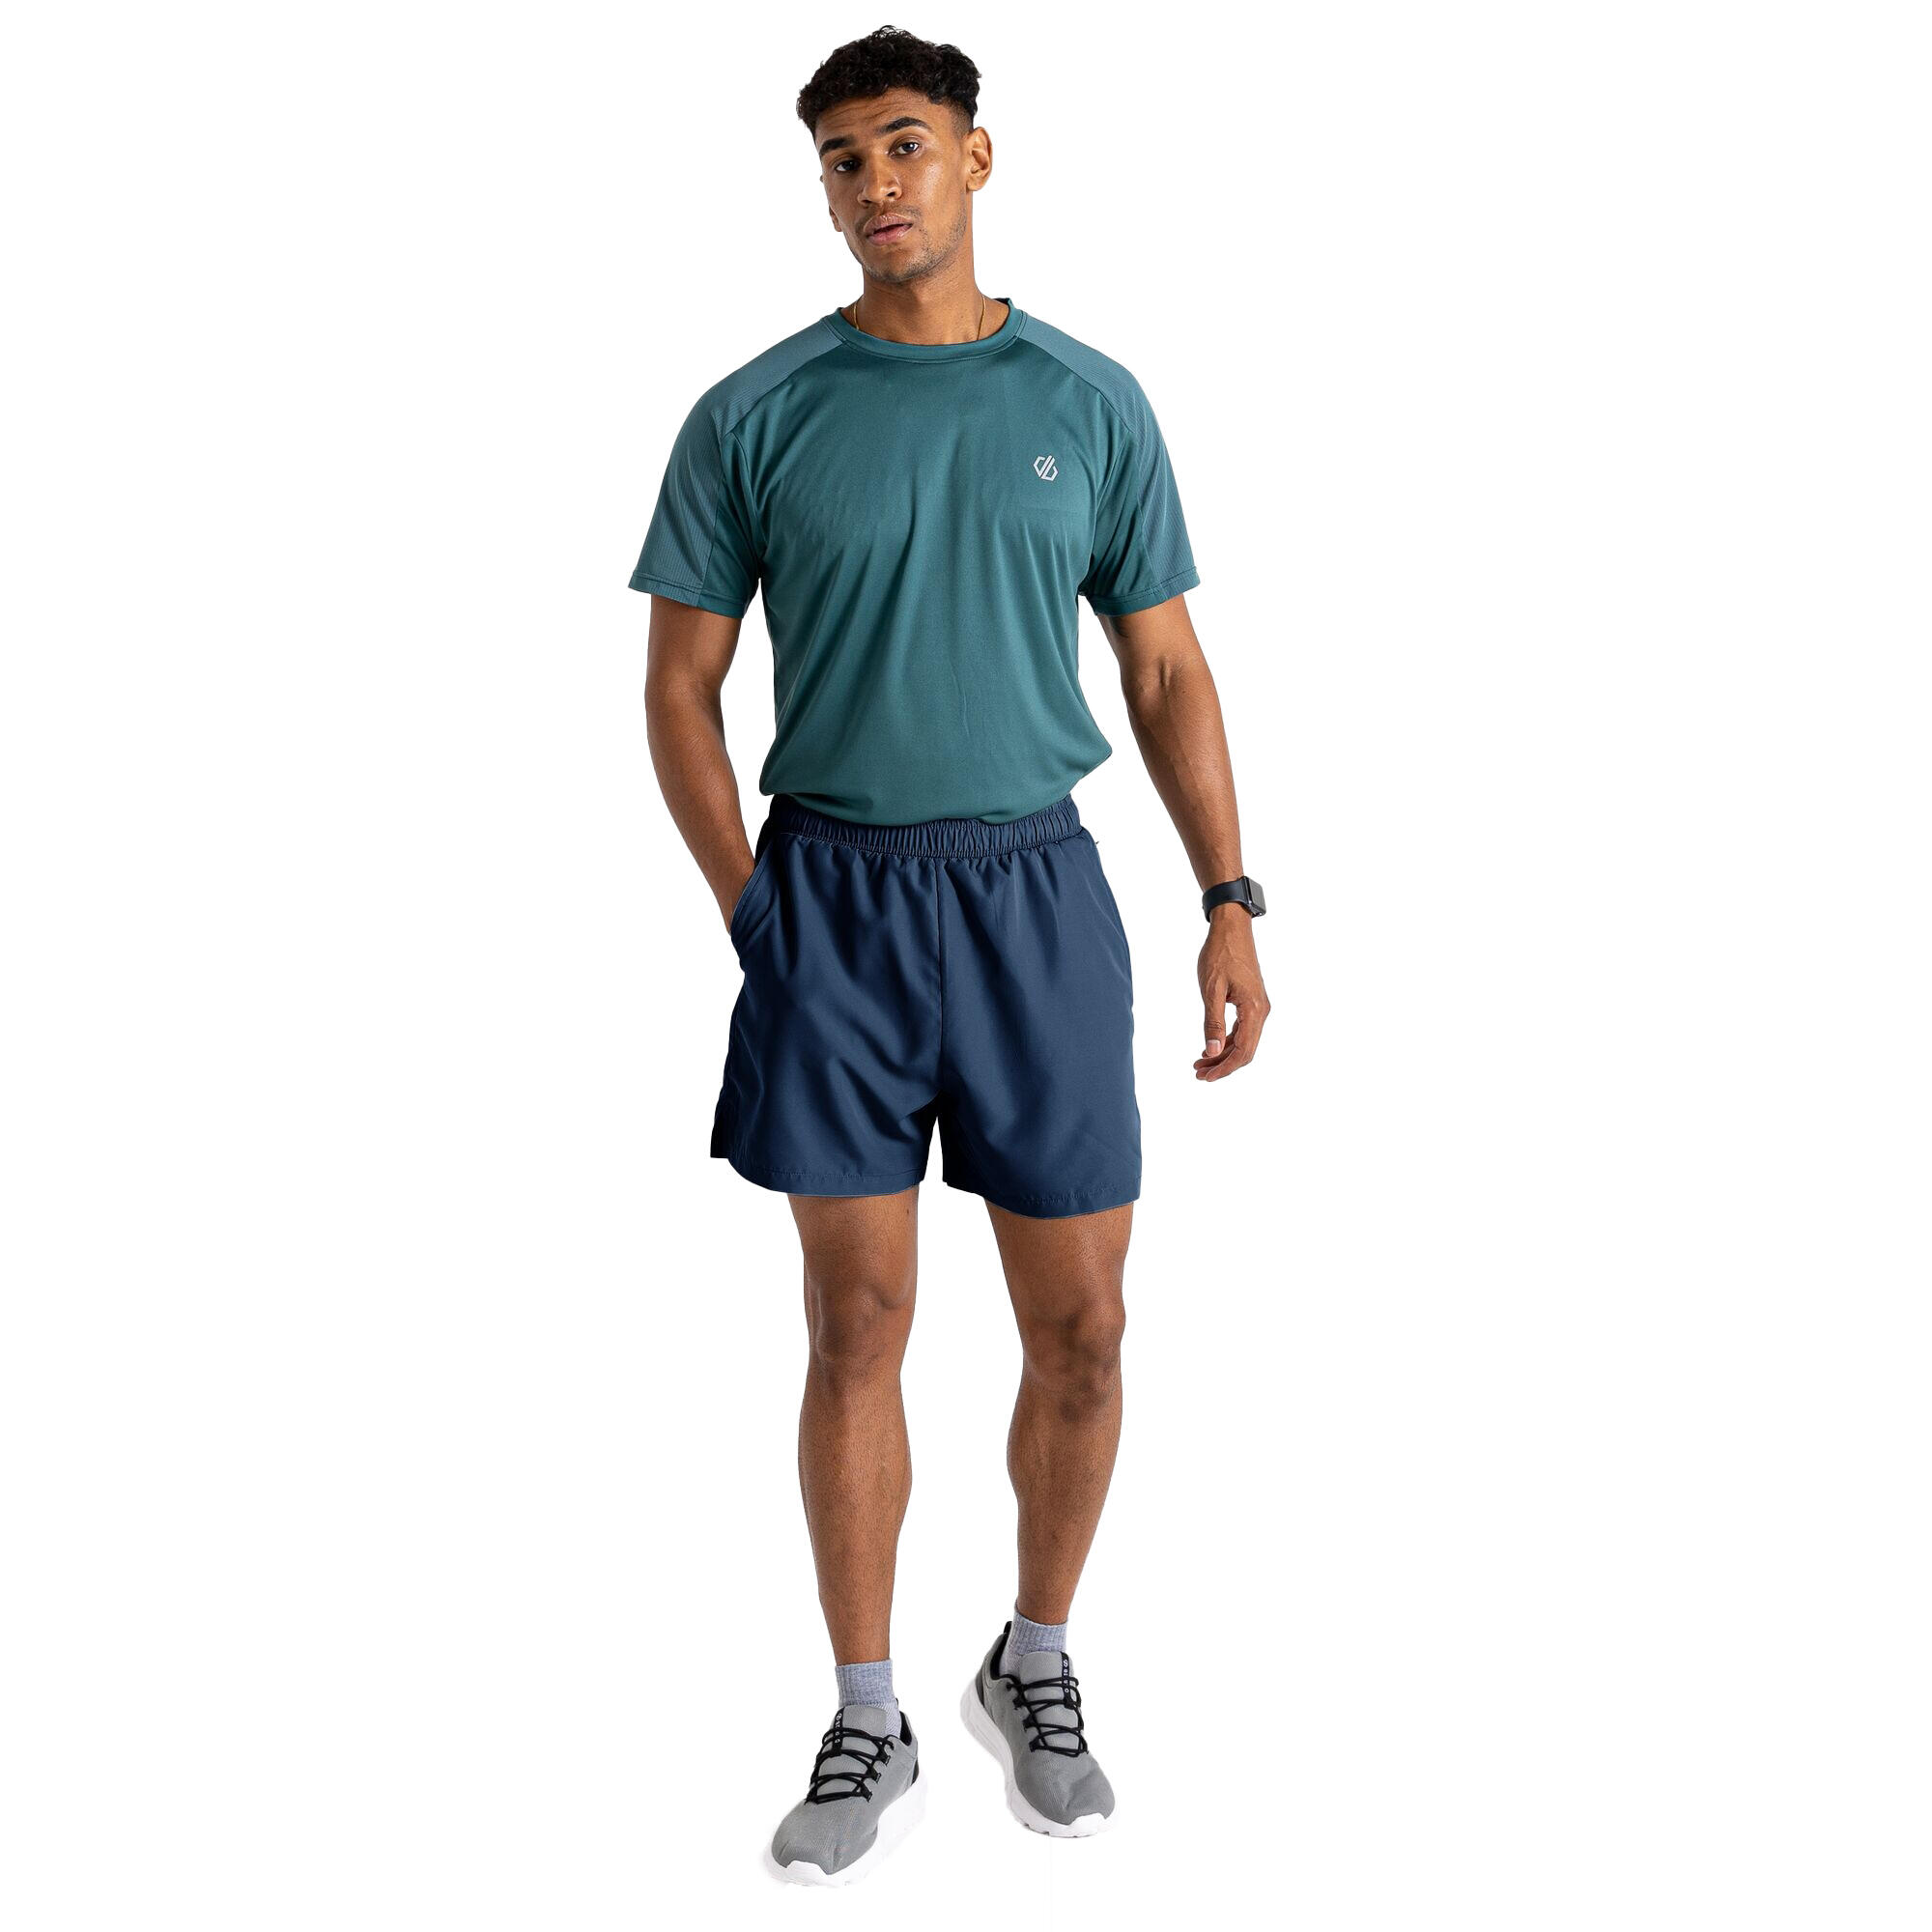 Mens Gym Shorts (Moonlight Denim) 4/5